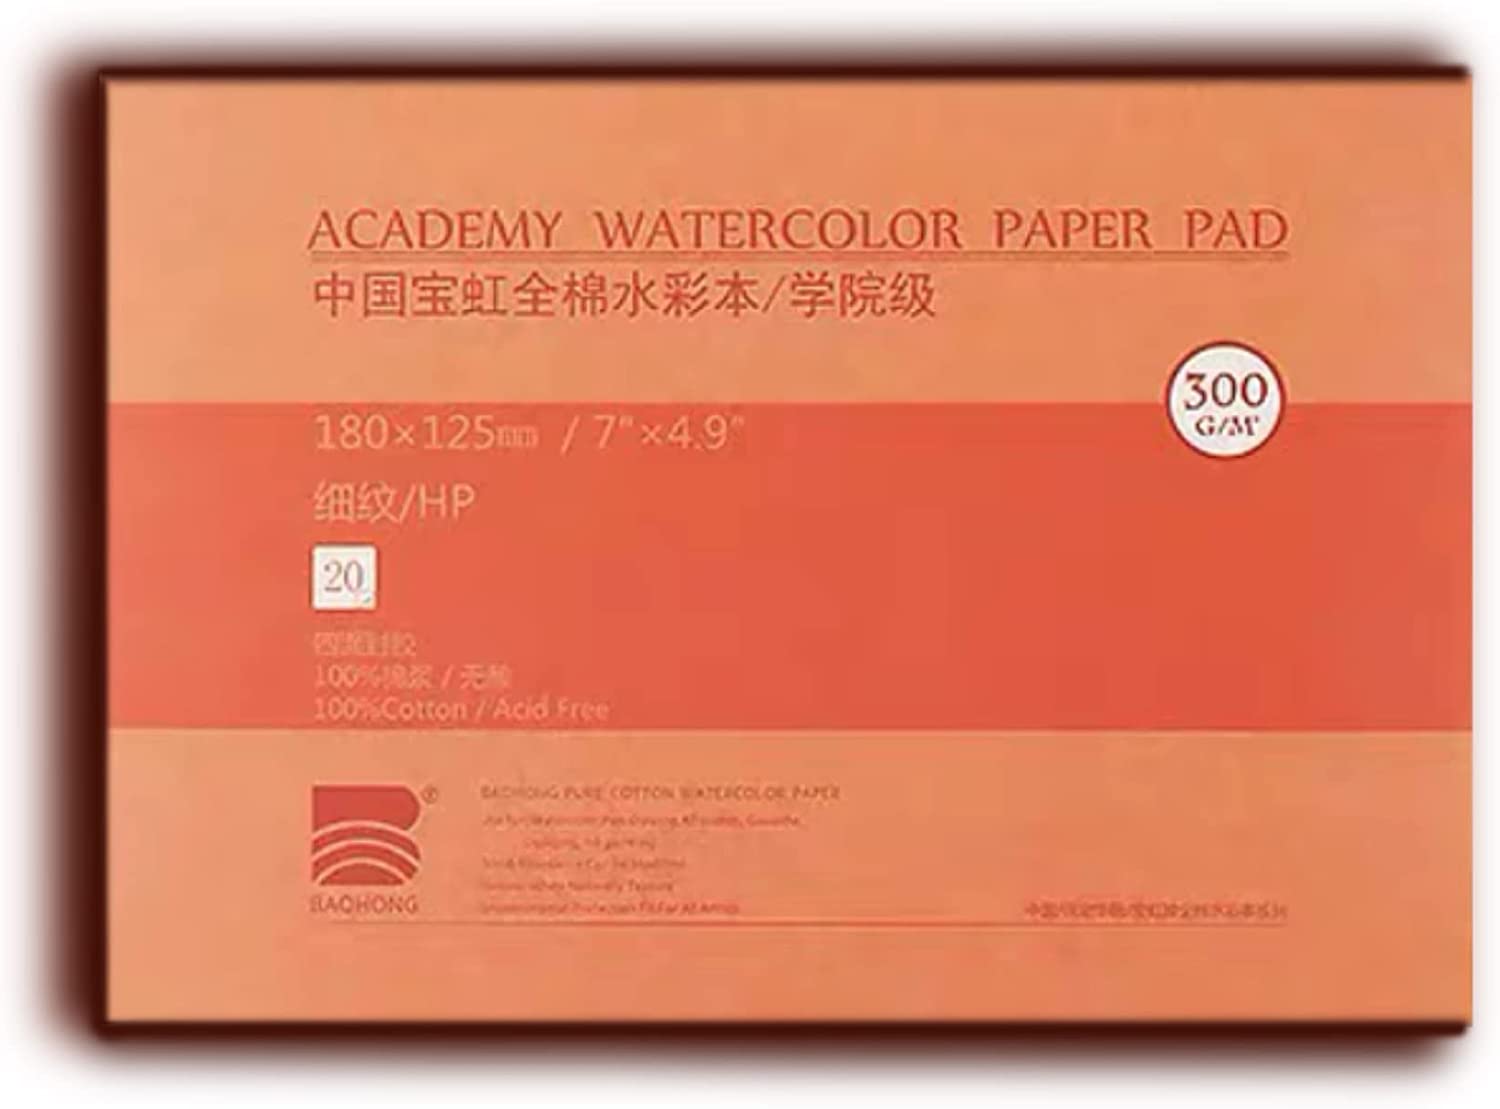 BAOHONG ACADEMY WATERCOLOR PAPER PAD 310X210MM (12 X 8 INCH) HOT